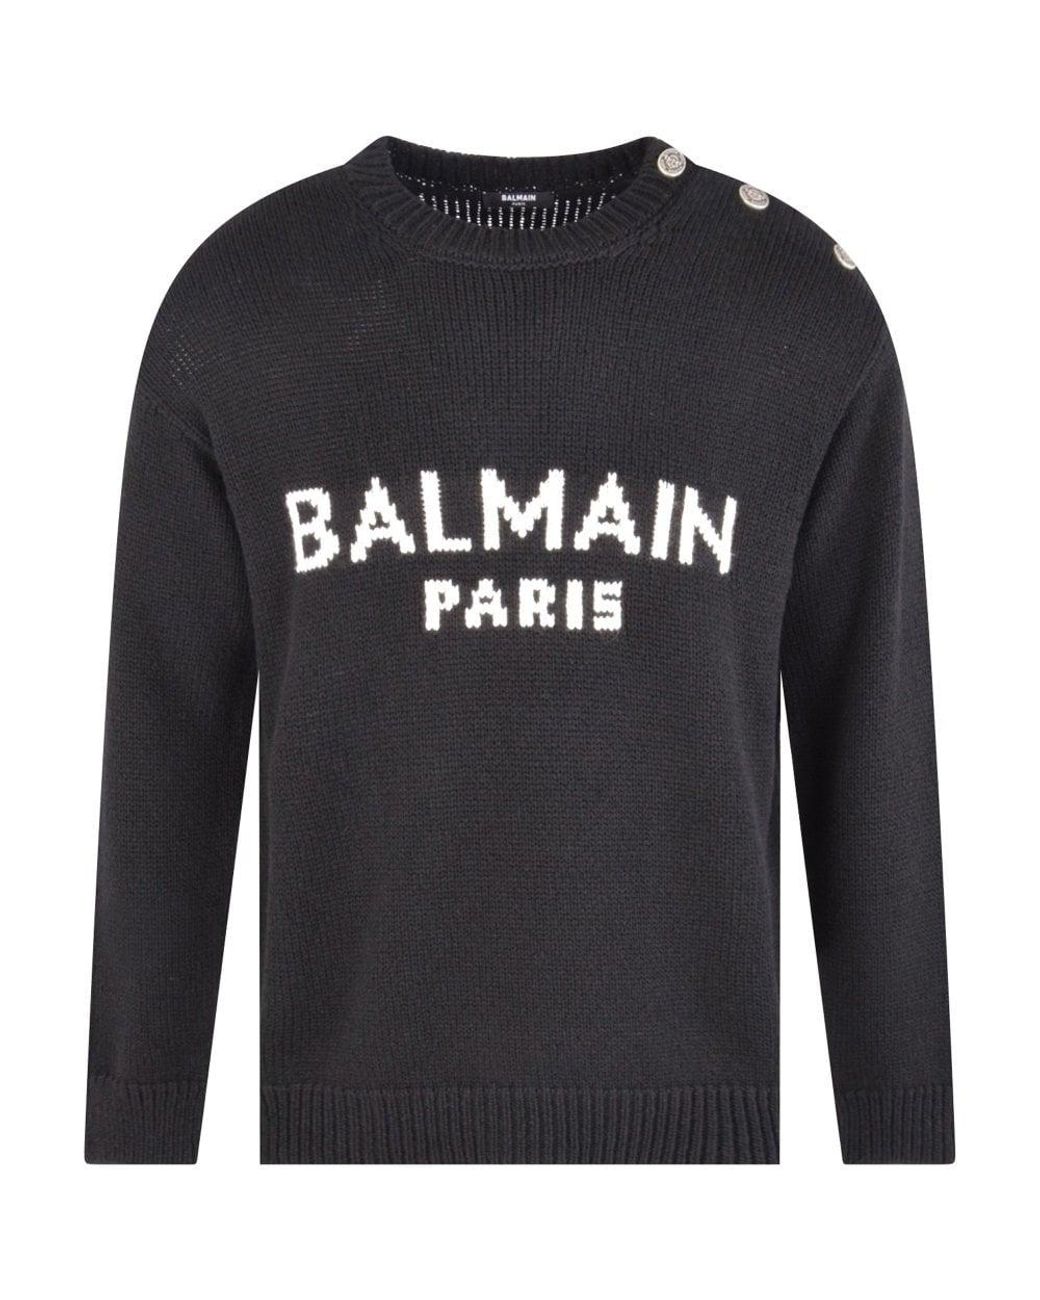 Balmain Wool Black & Ecru Oversized Logo Knit Jumper for Men - Lyst